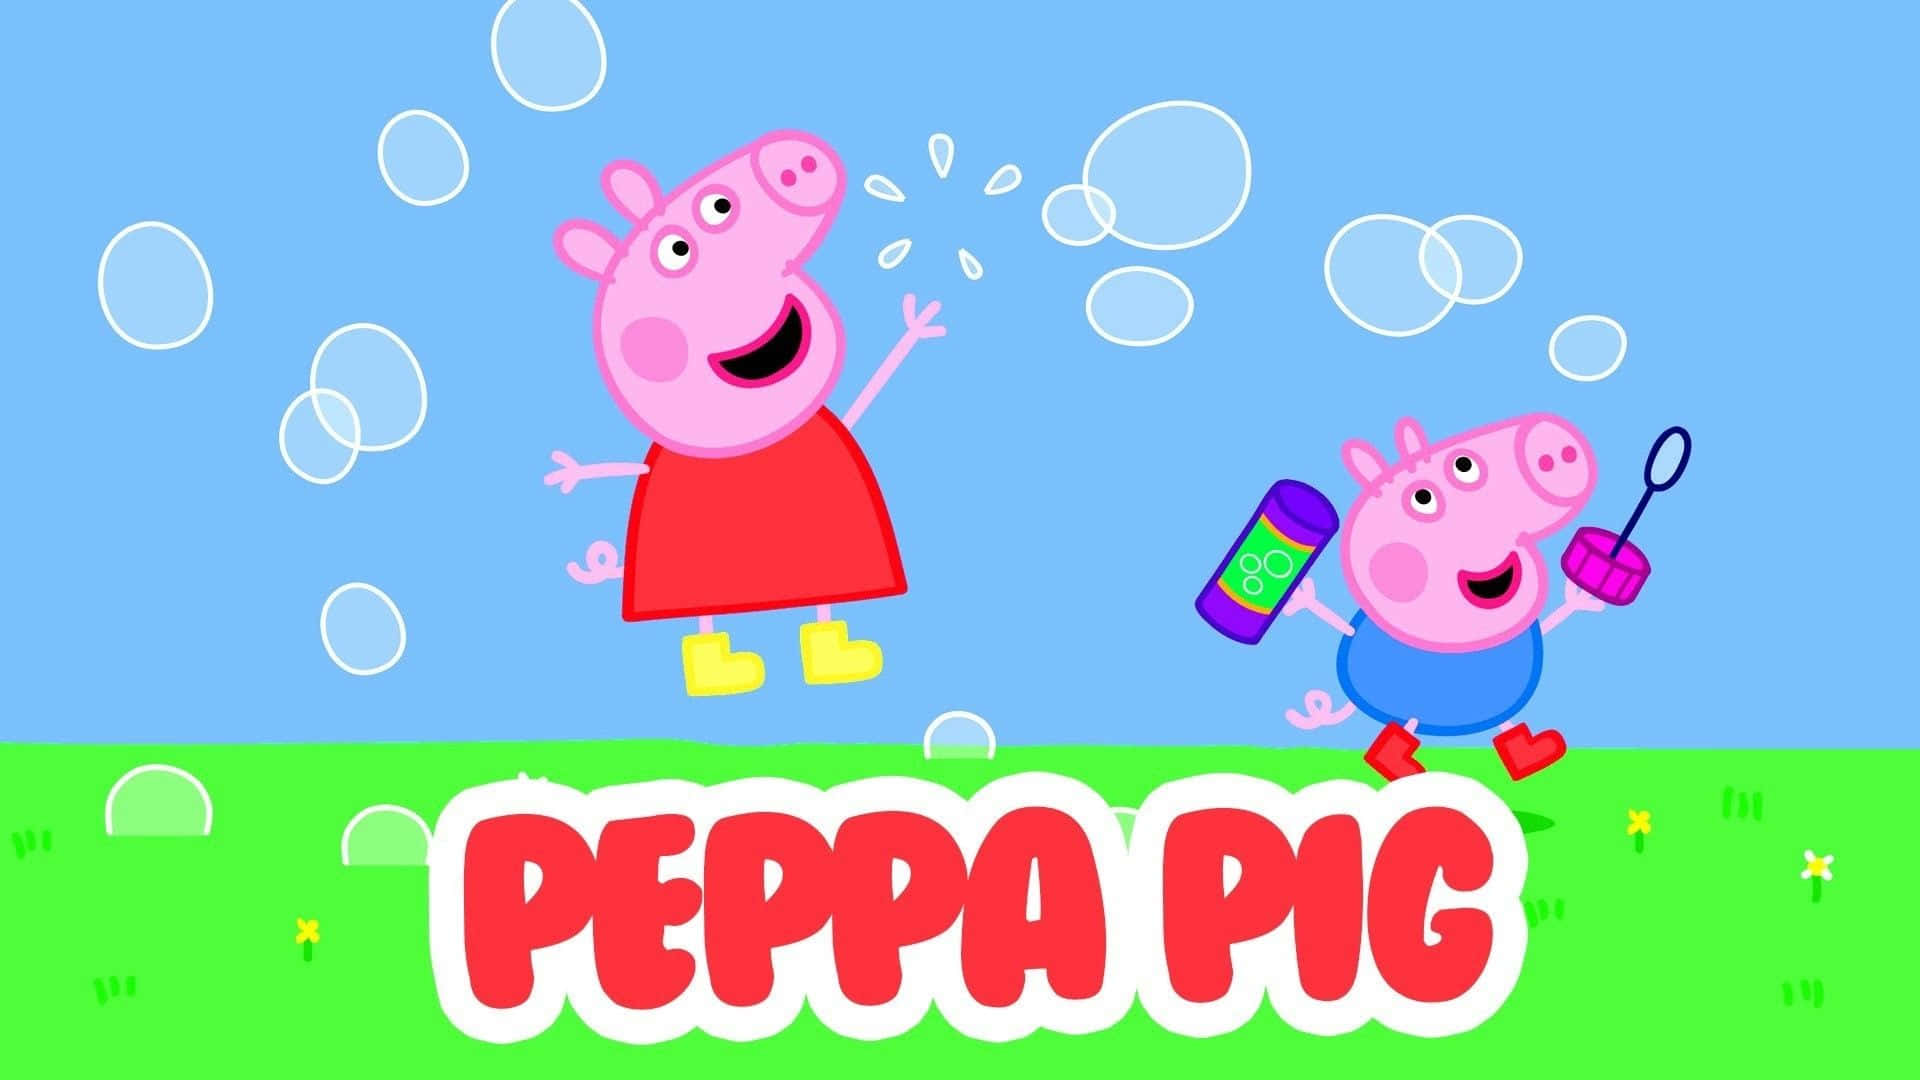 Spelarbubbles George Pig, Peppa Pig Bakgrund